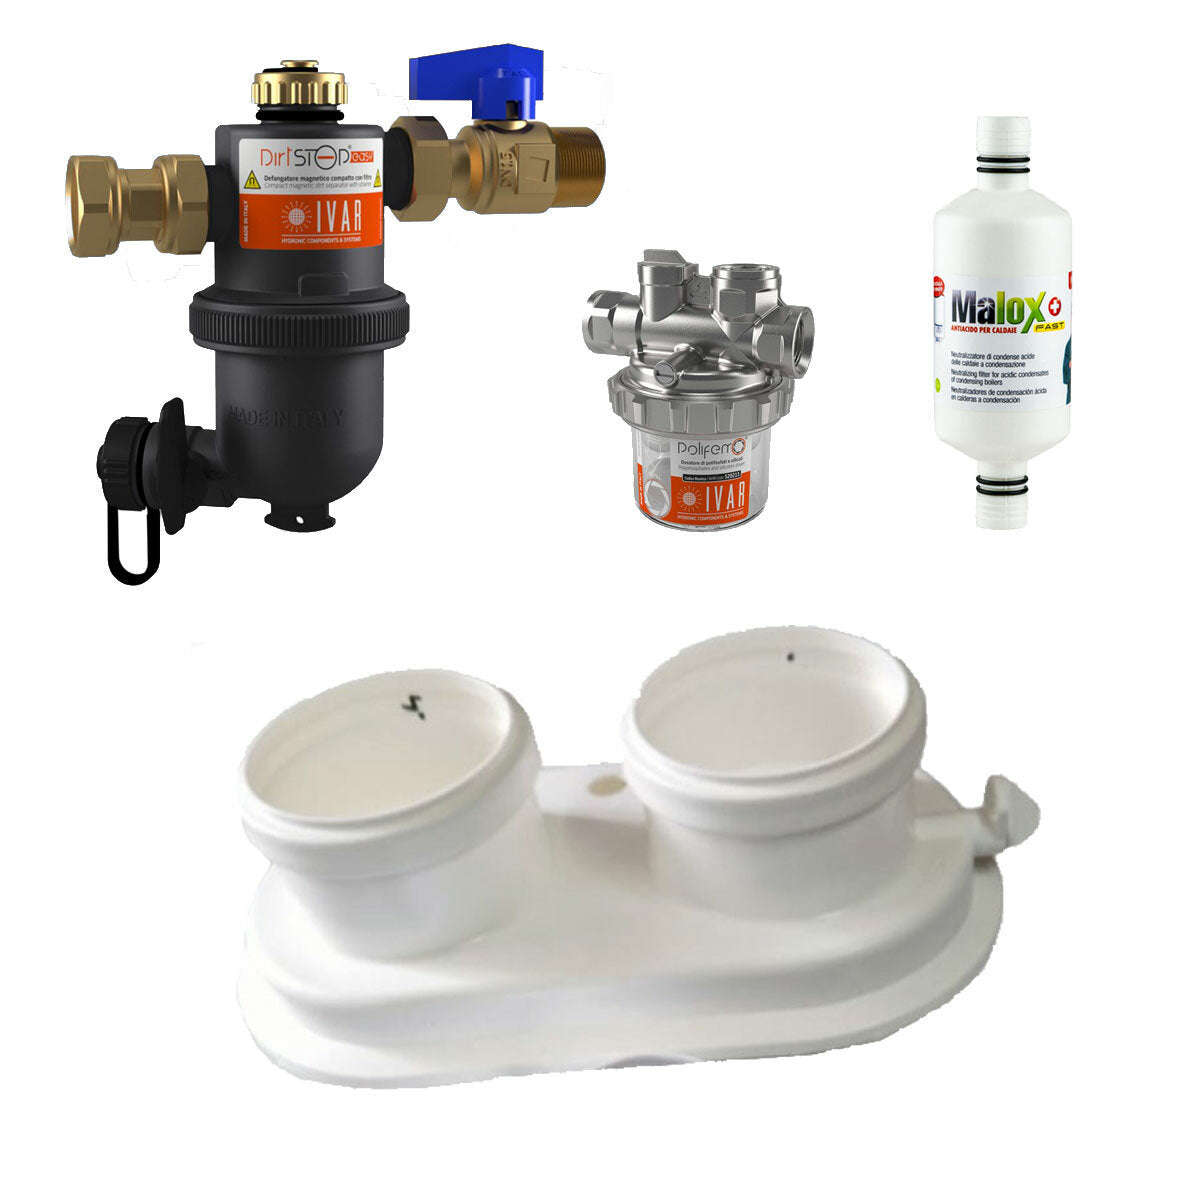 Boiler installation kit with dirt separator - polyphosphate dispenser - condensate neutralizer - universal split fume exhaust